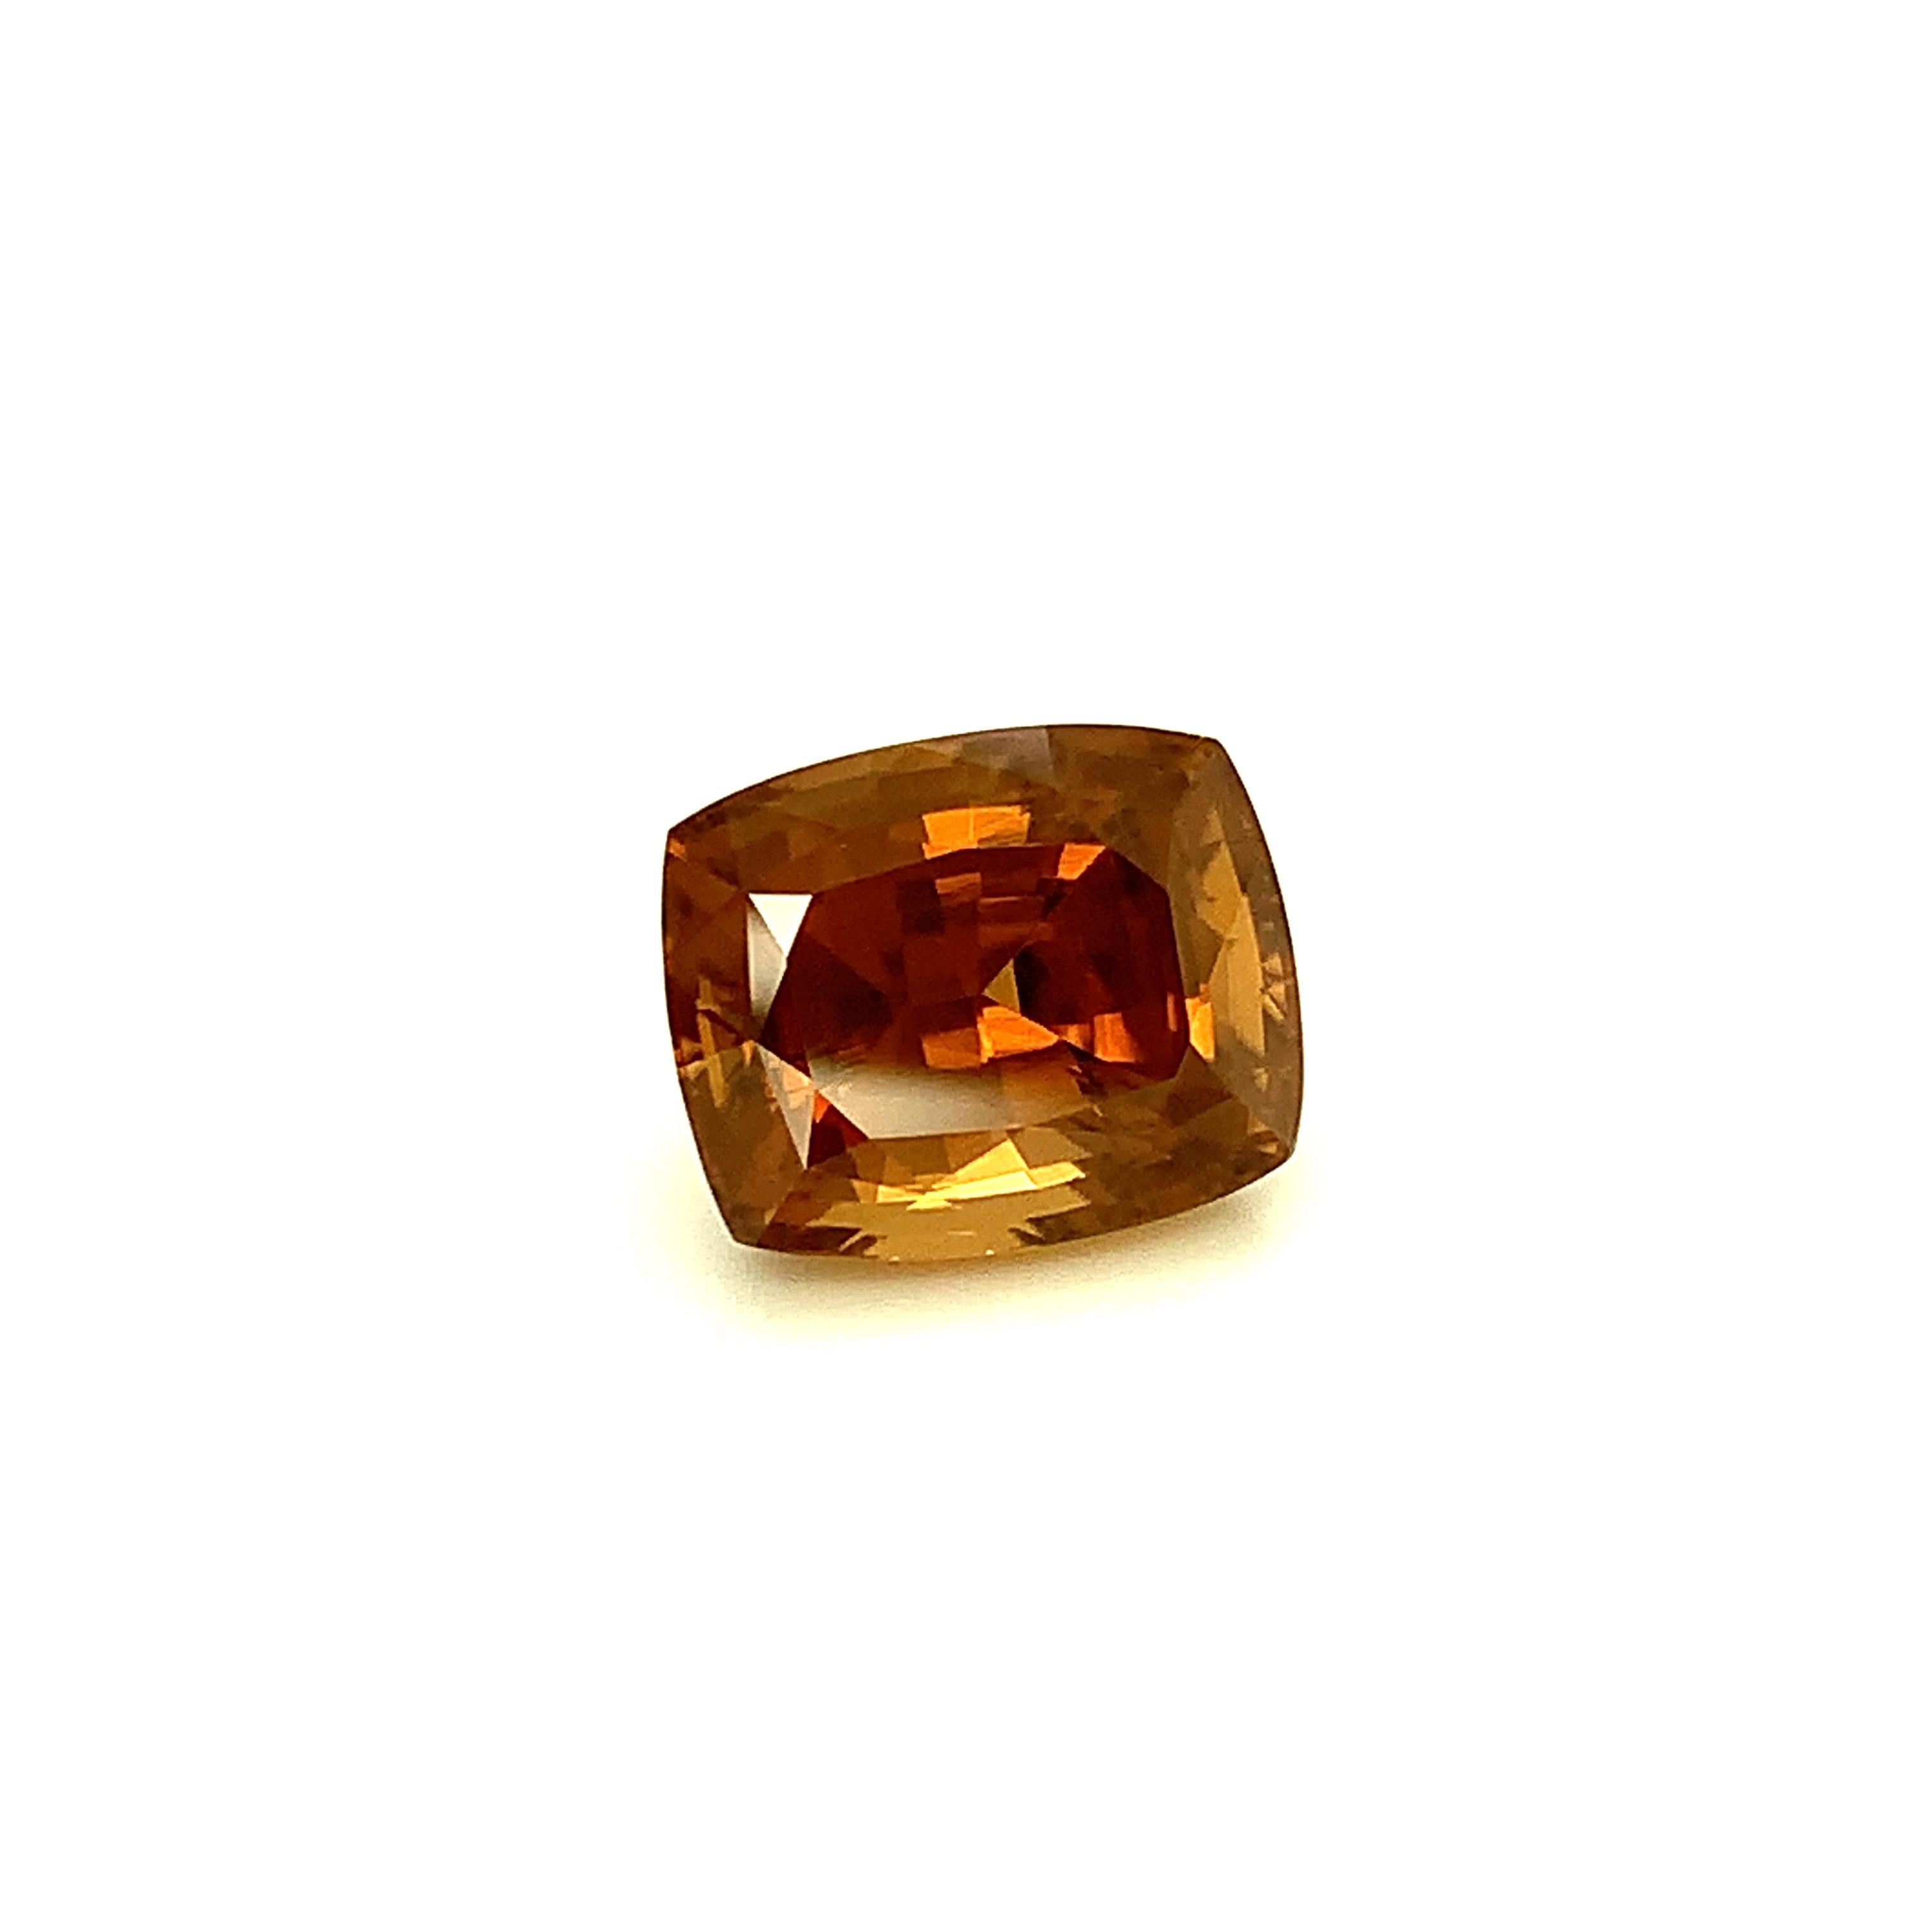 orangish brown gem